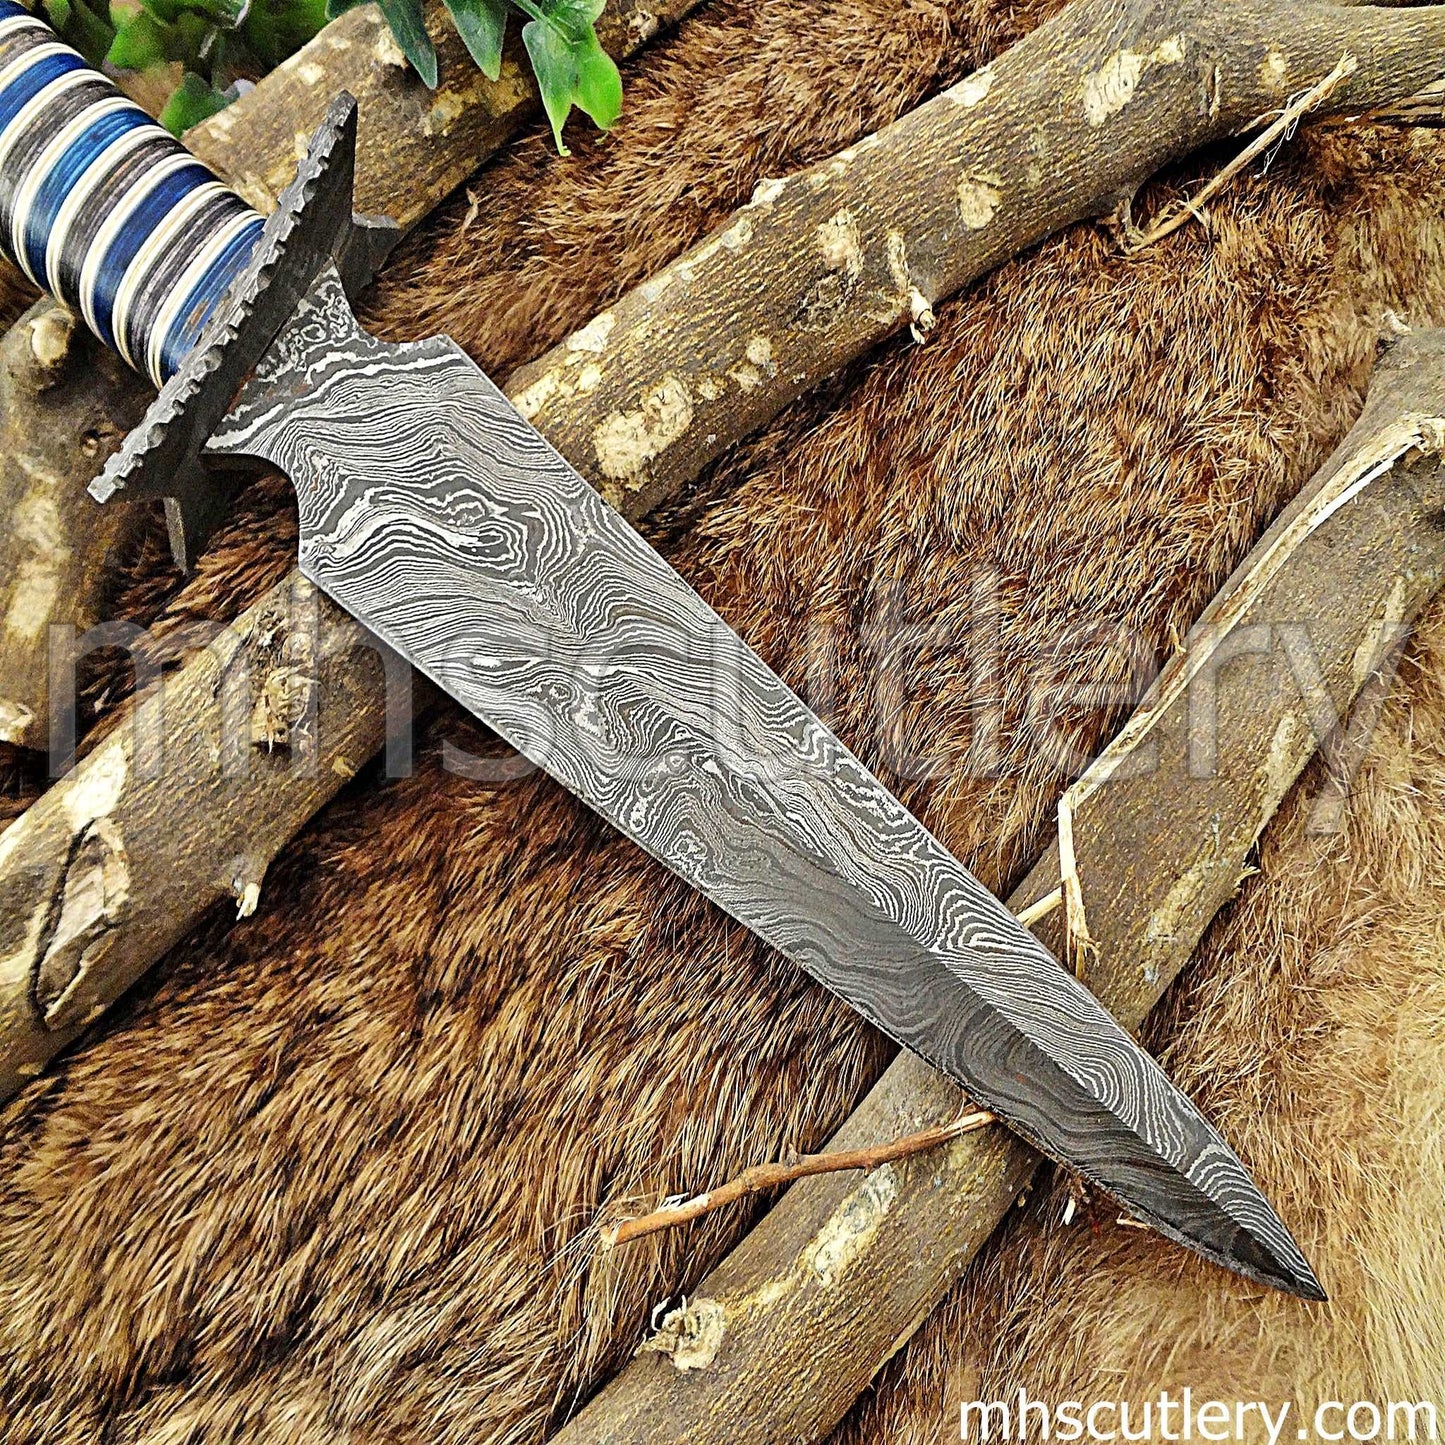 Custom Hand Forged Damascus Steel Survival Dagger | mhscutlery